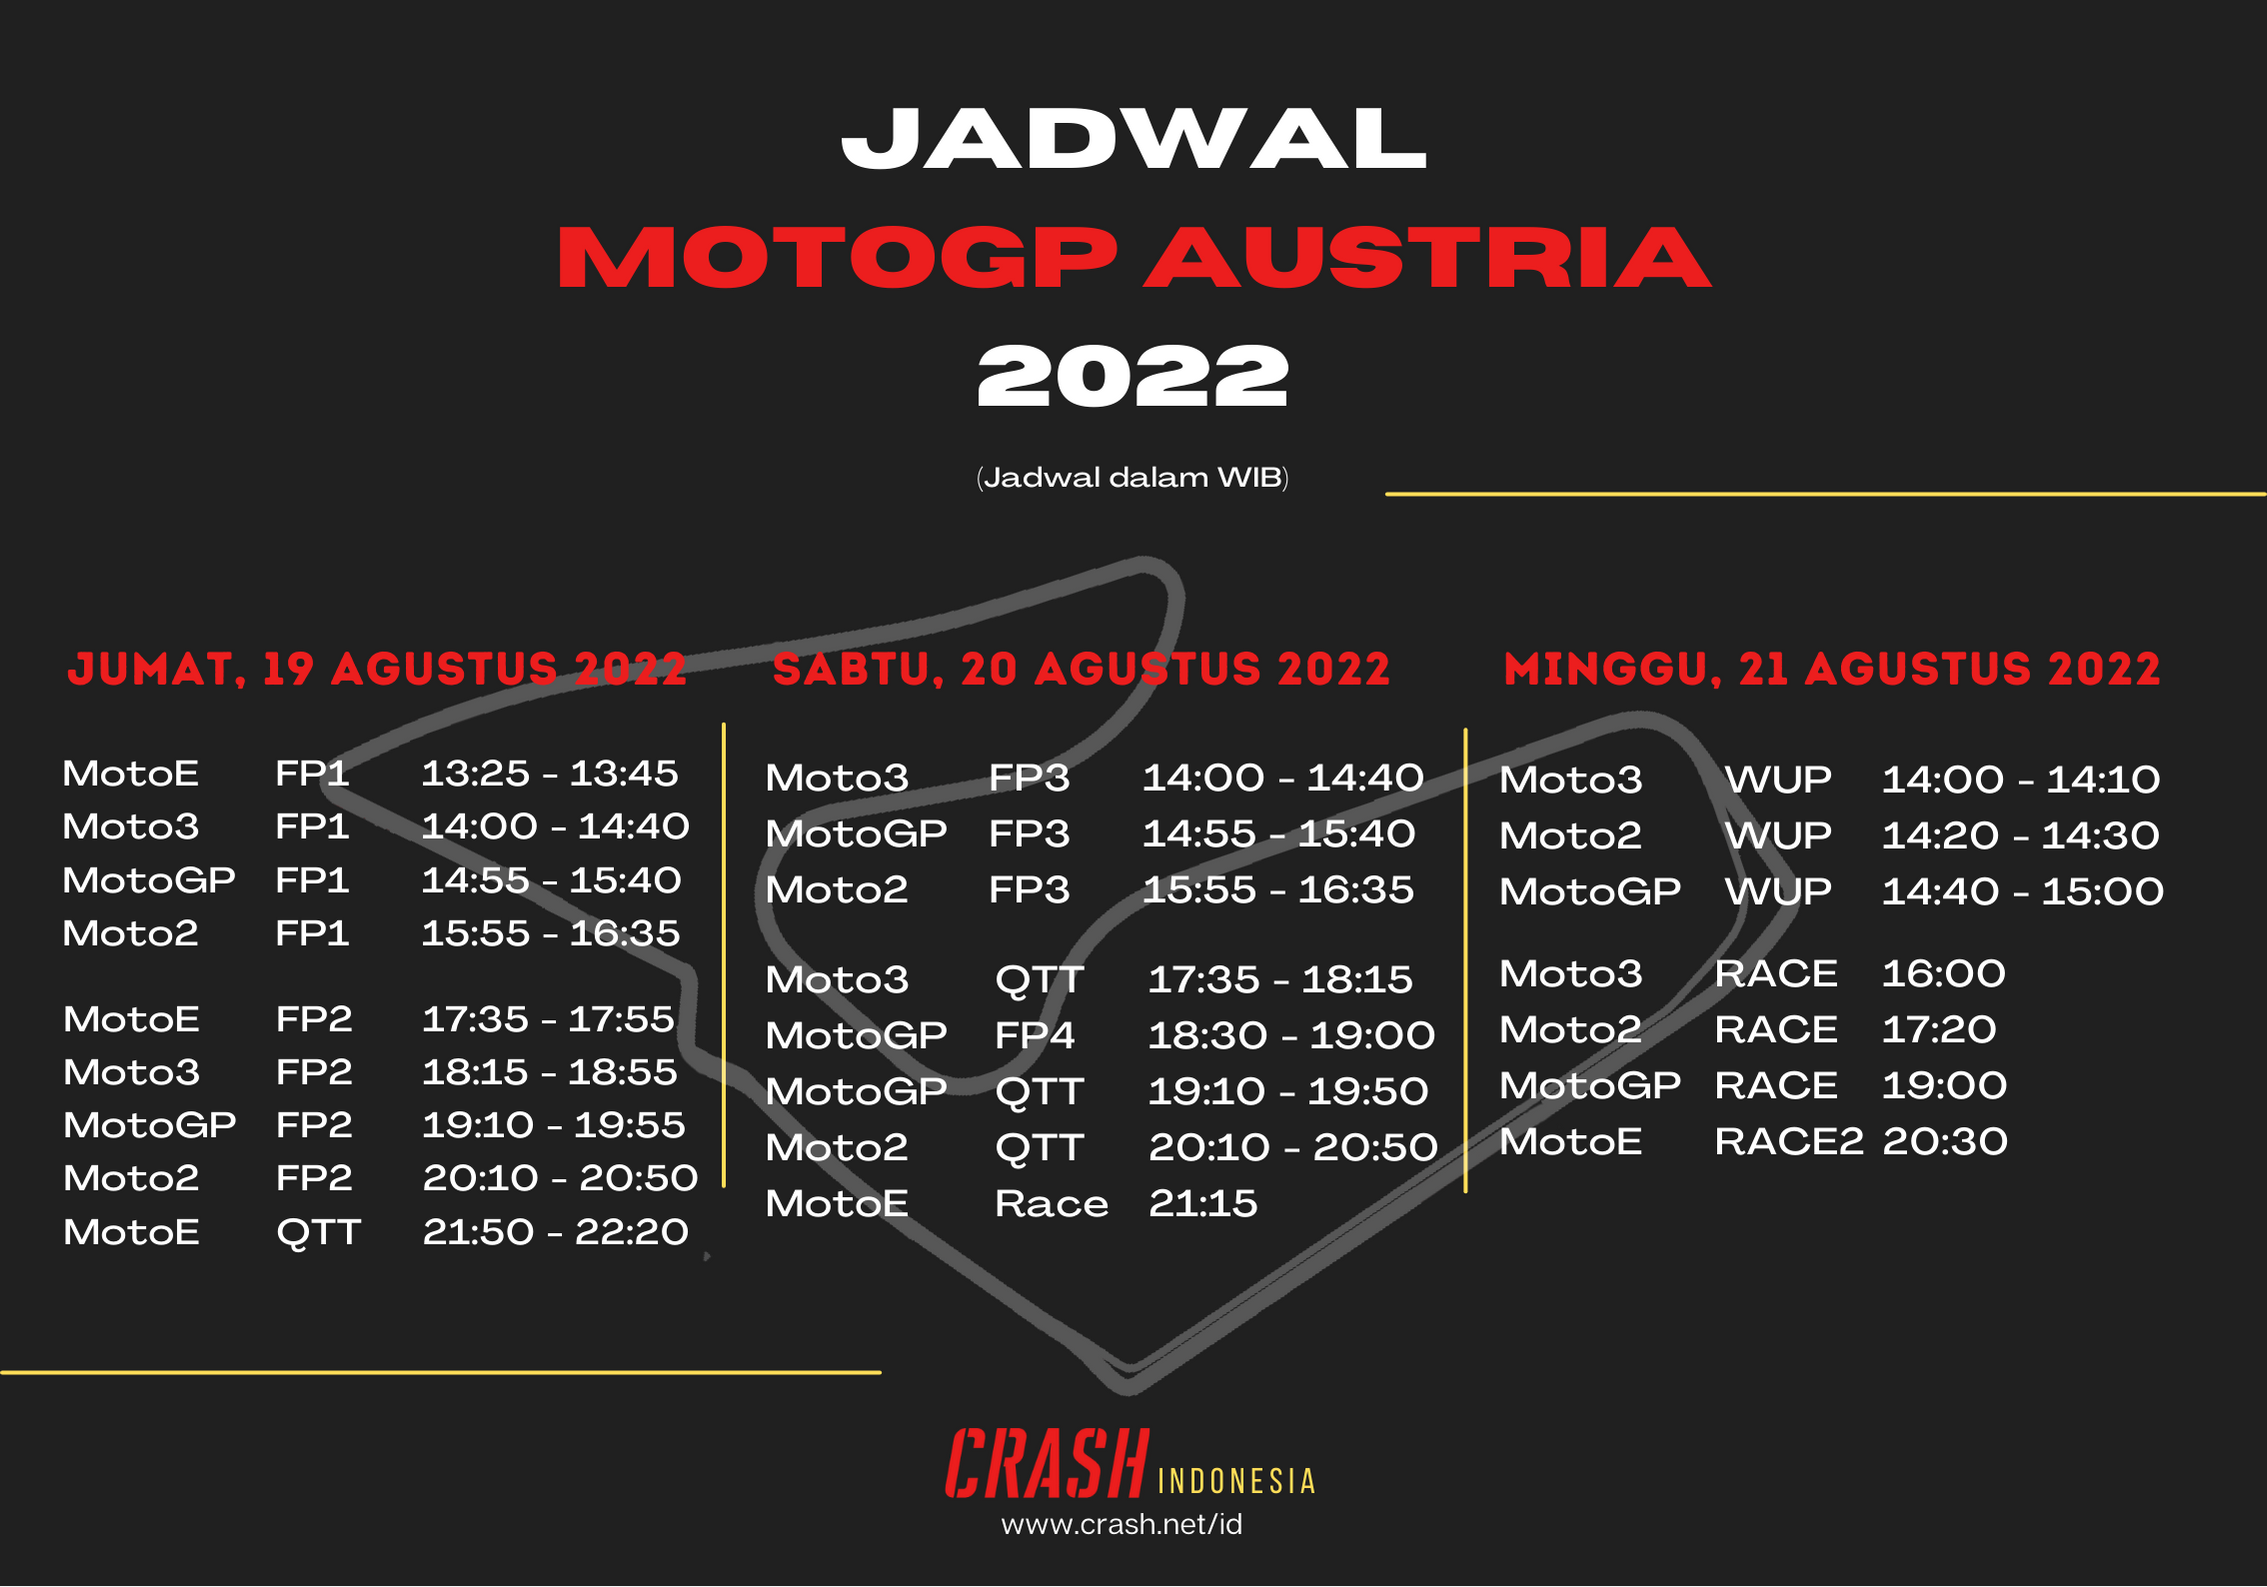 Austrian MotoGP Schedule in Western Indonesian Time